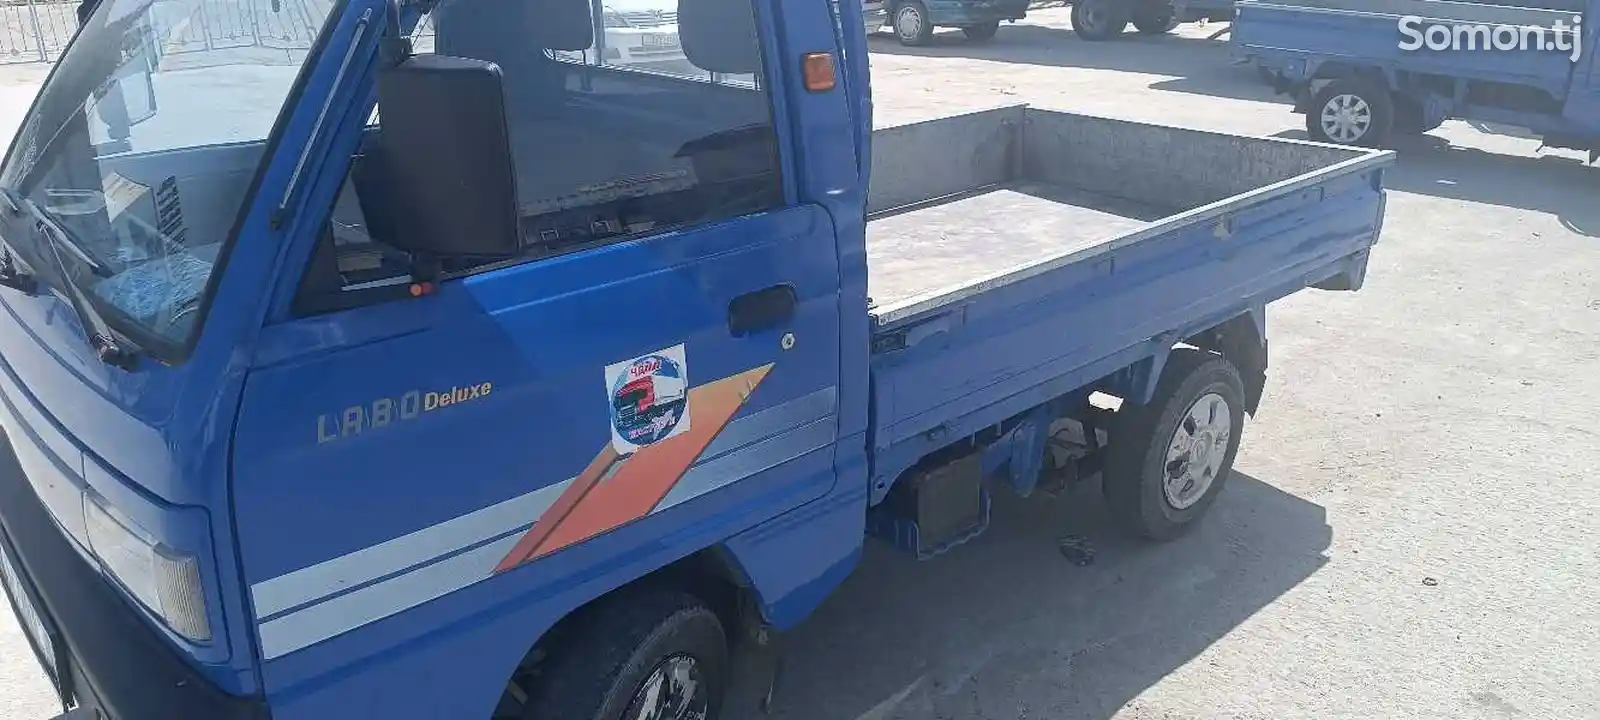 Услуги перевозки на грузовике Daewoo Labo-1